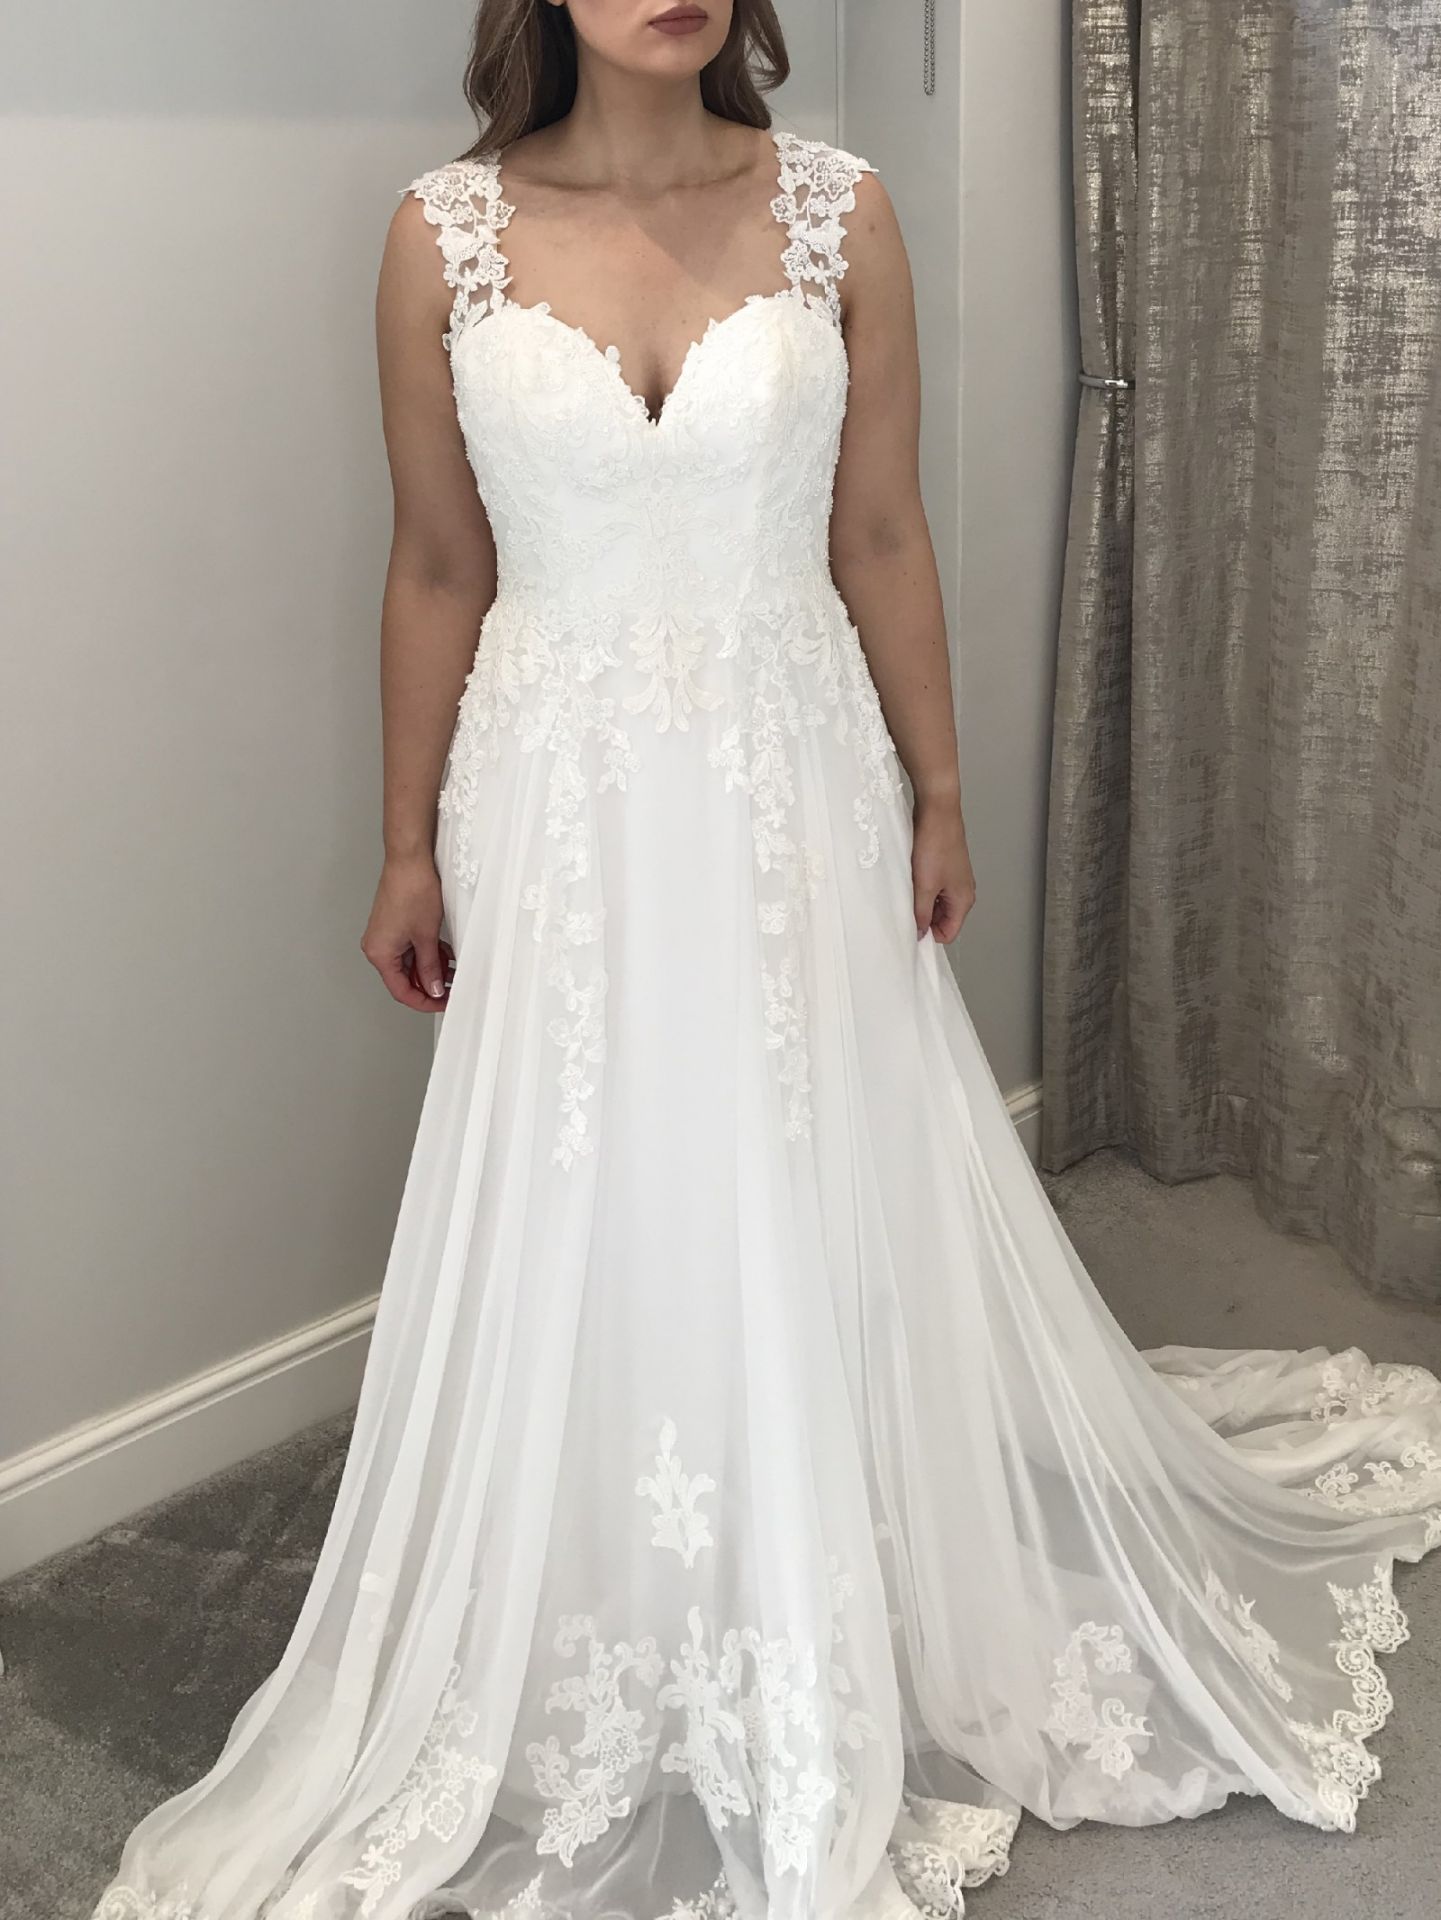 1 x Justin Alexander Designer Beaded Venice Lace A-line Wedding Bridal Dress - Size 16 - RRP £1,545 - Image 6 of 6